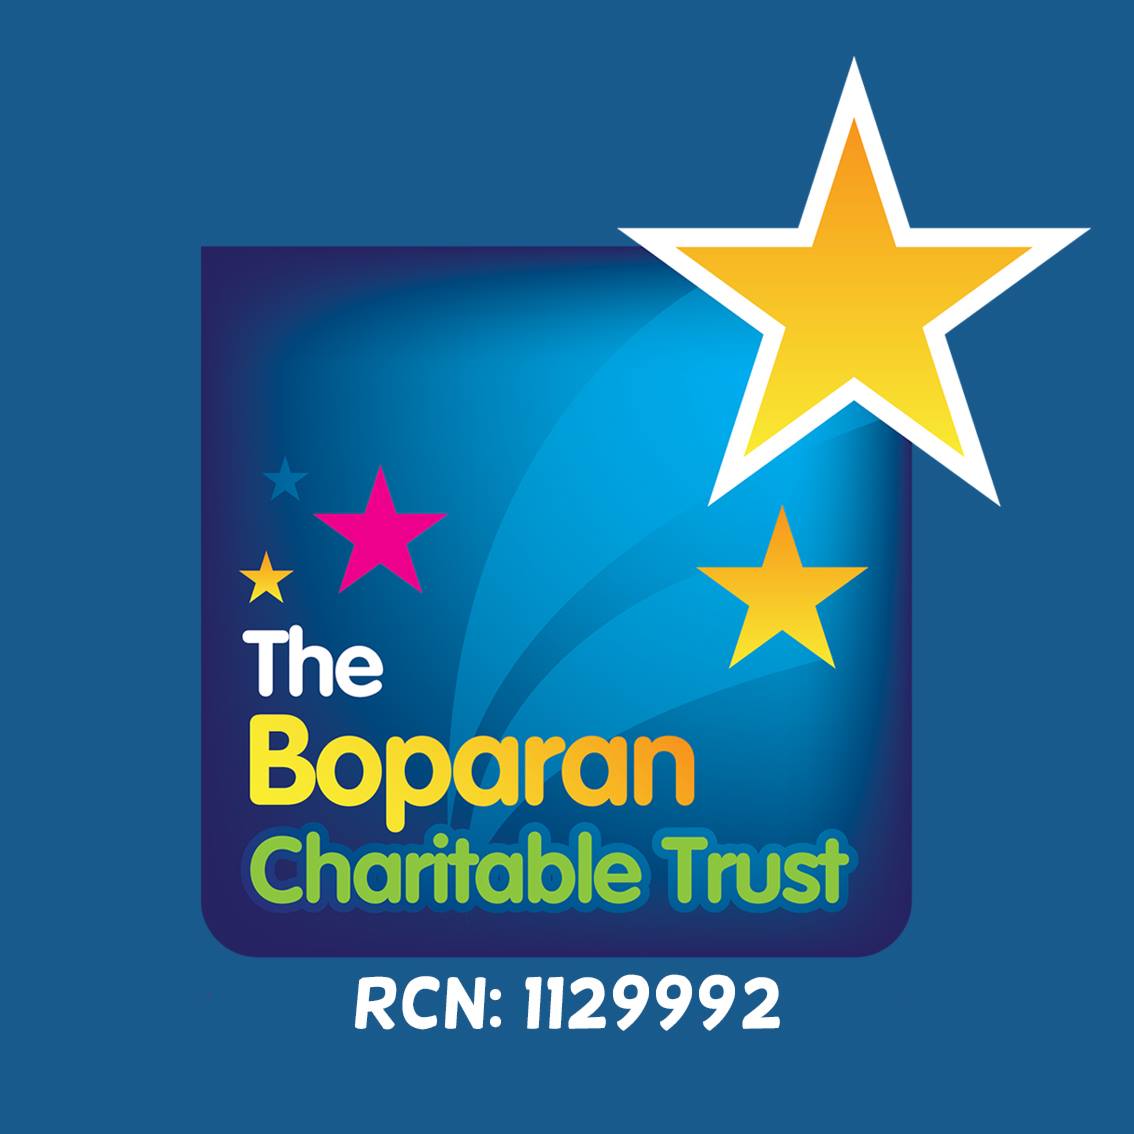 The Boparan Charitable Trust